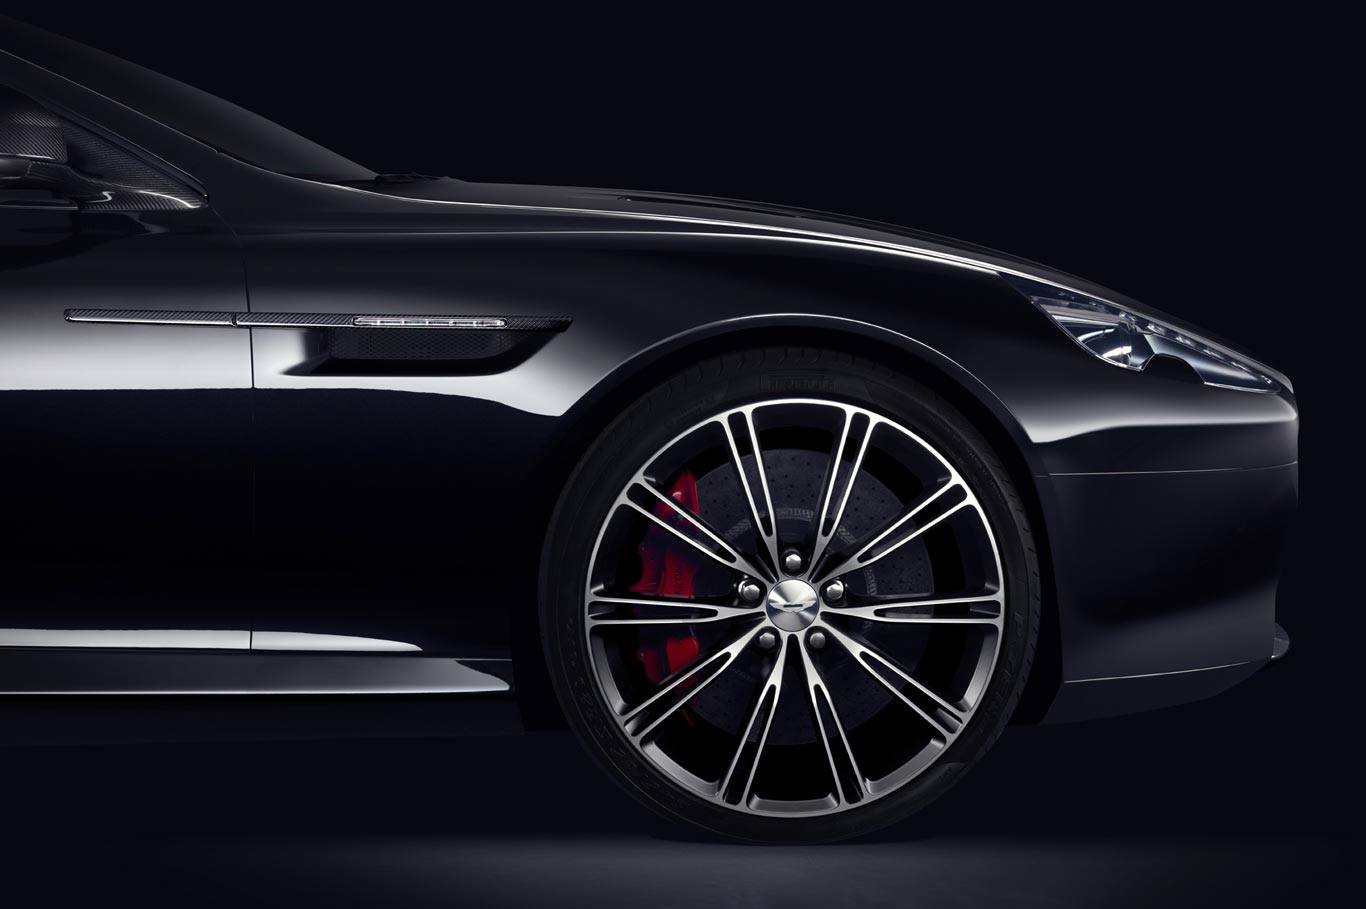 Aston Martin DB9 Black Edition front view